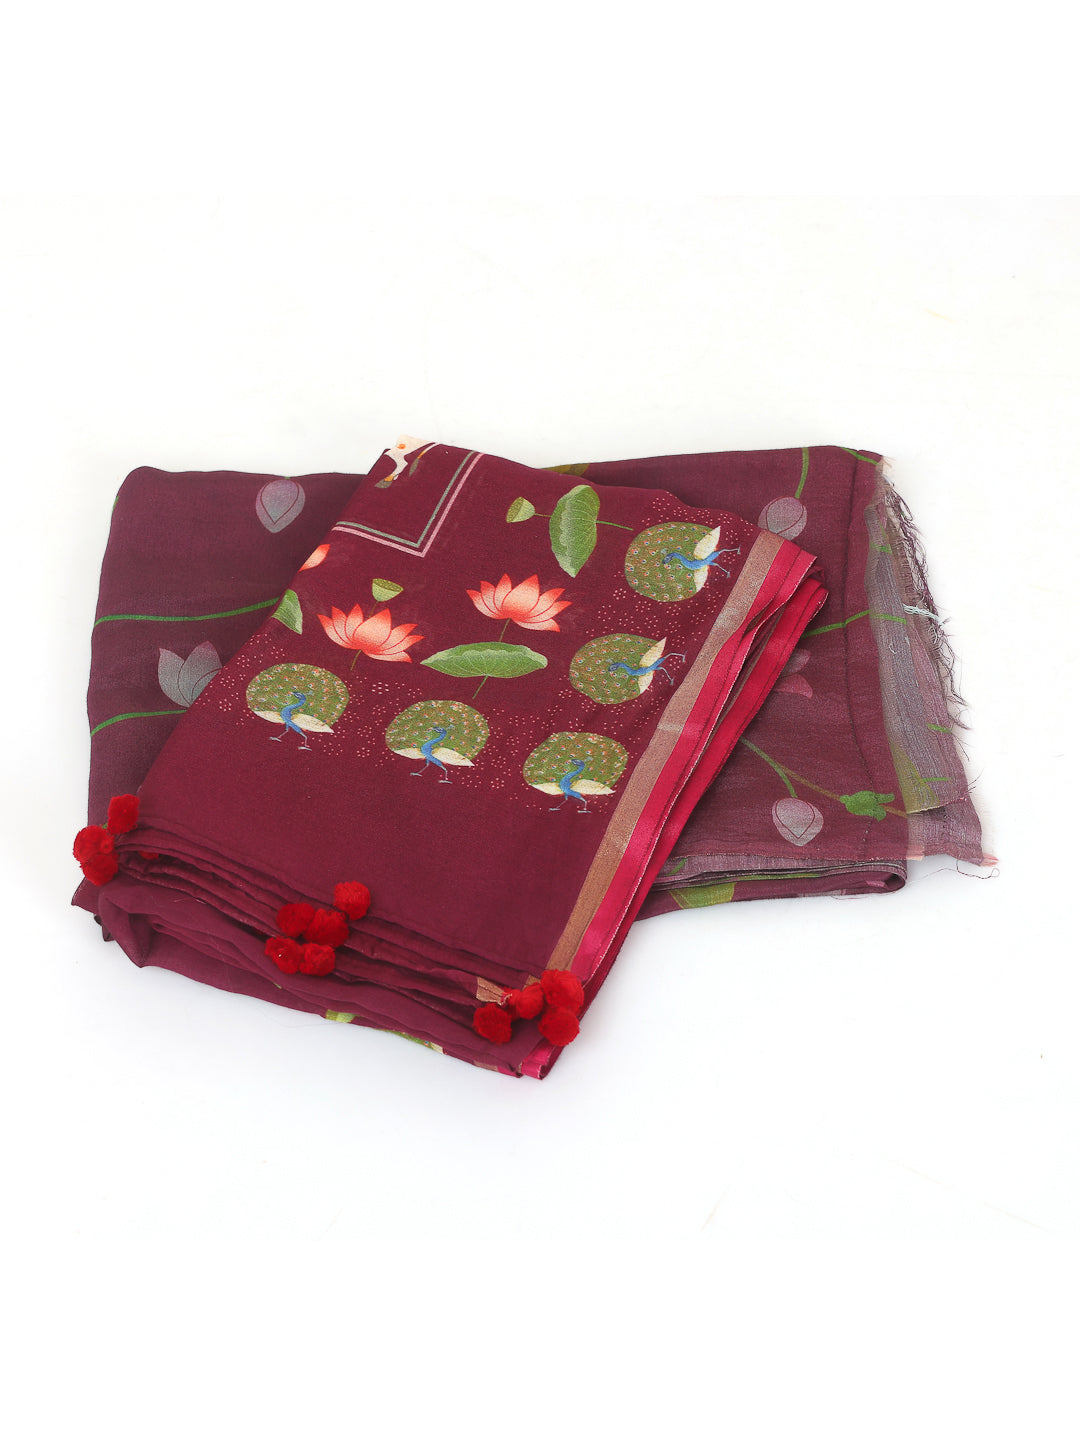 Burgungy Pichwai Cotton Silk Suit Set